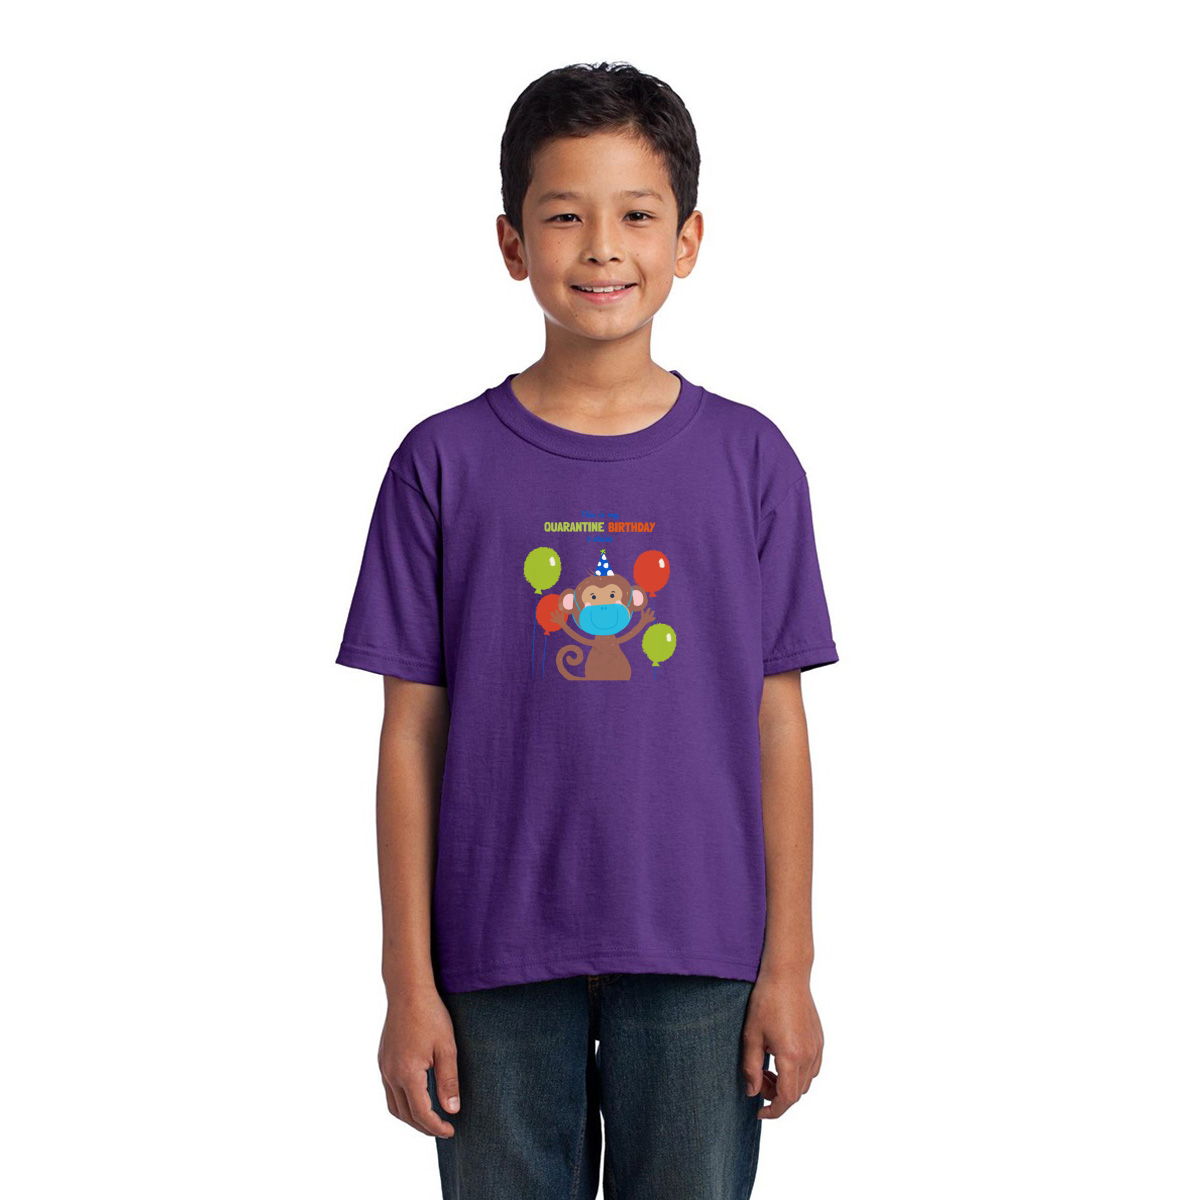 It is my quarantine birthday  Toddler T-shirt | Purple